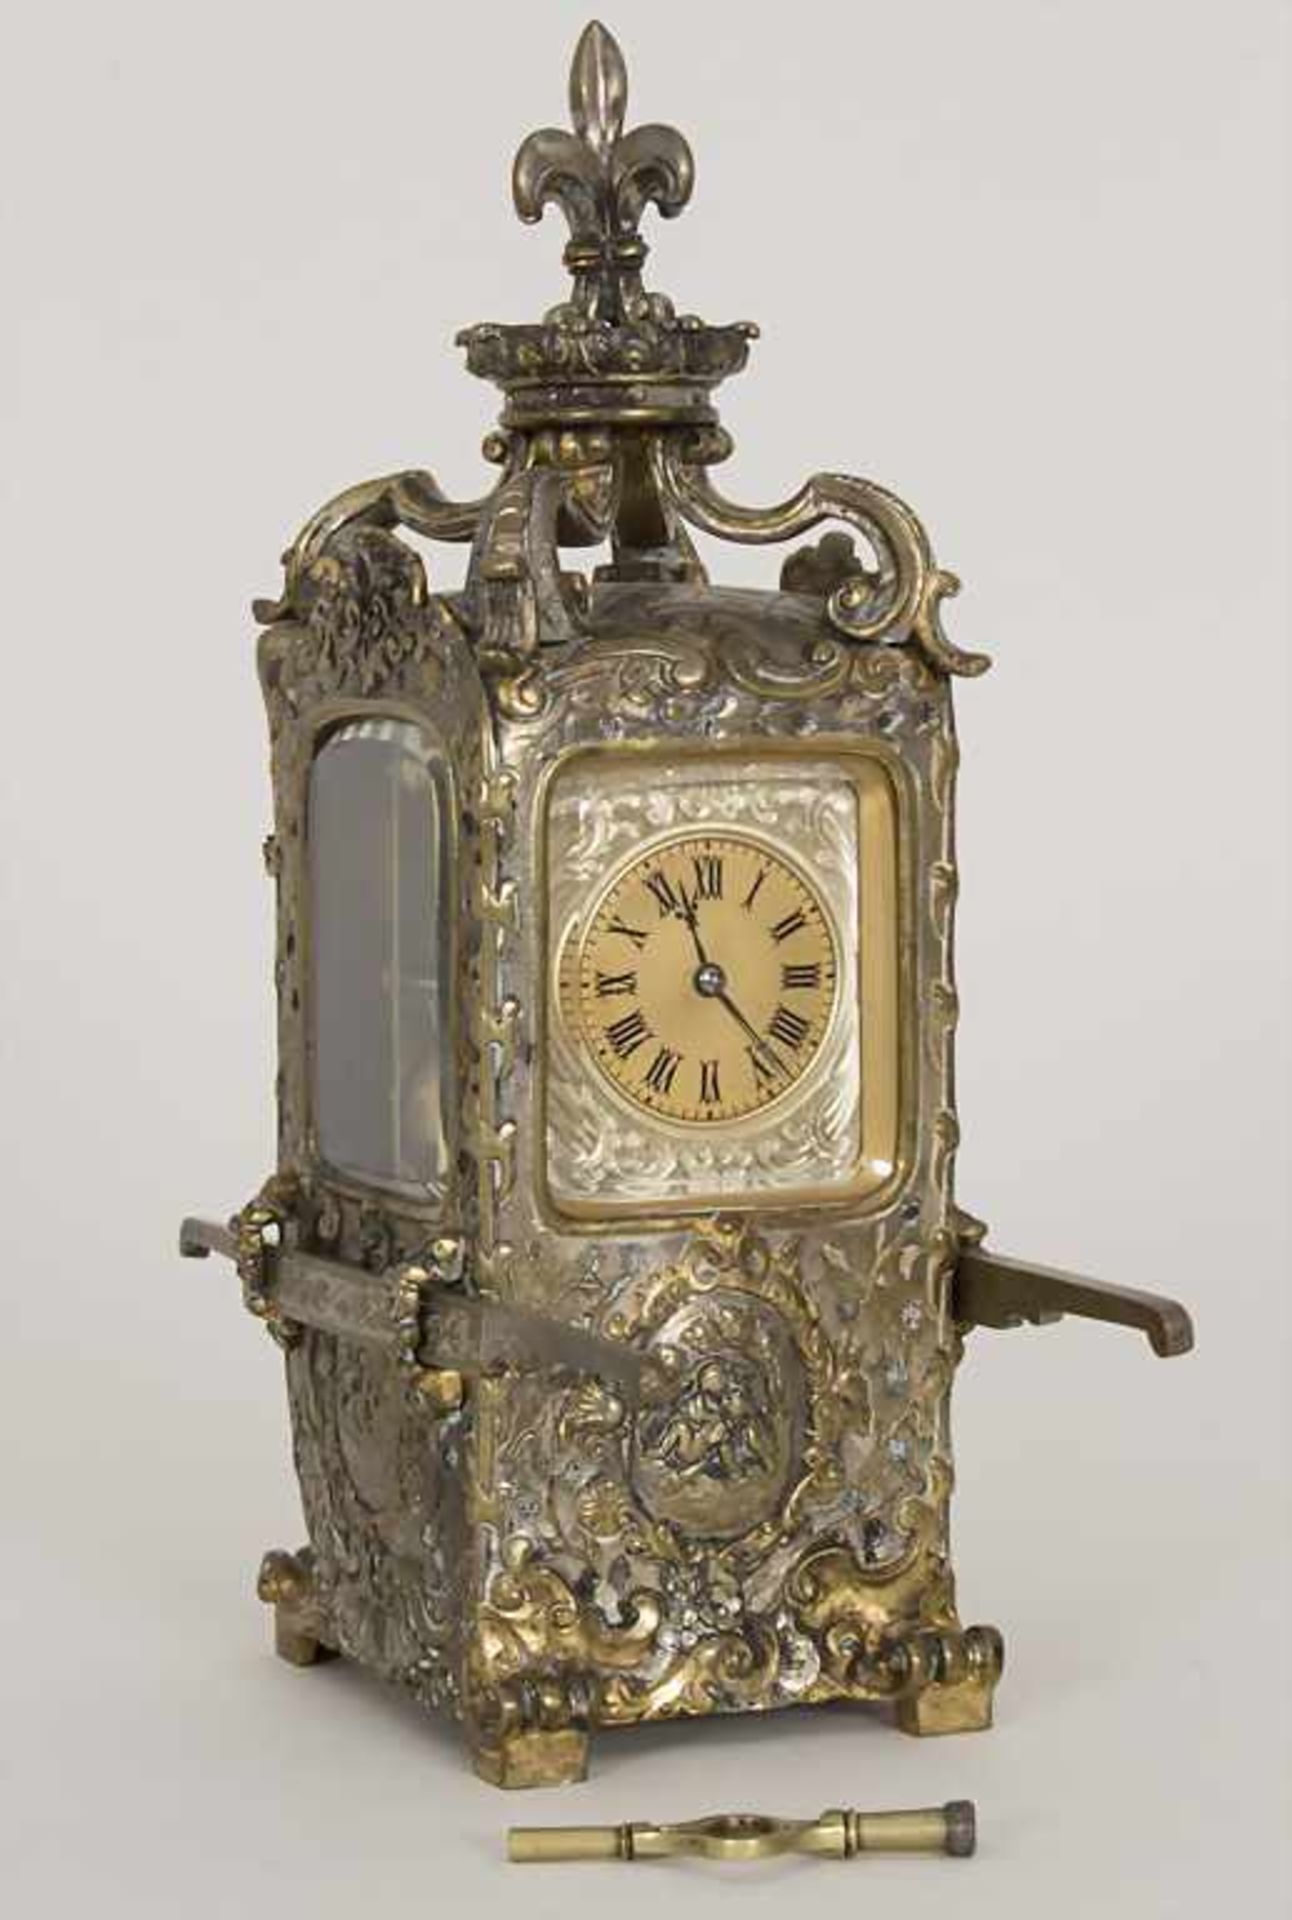 Sänften Uhr / A table clock, um 1900Gehäuse: rundum verglaste u. versilberte Bronze,Uhrwerk: